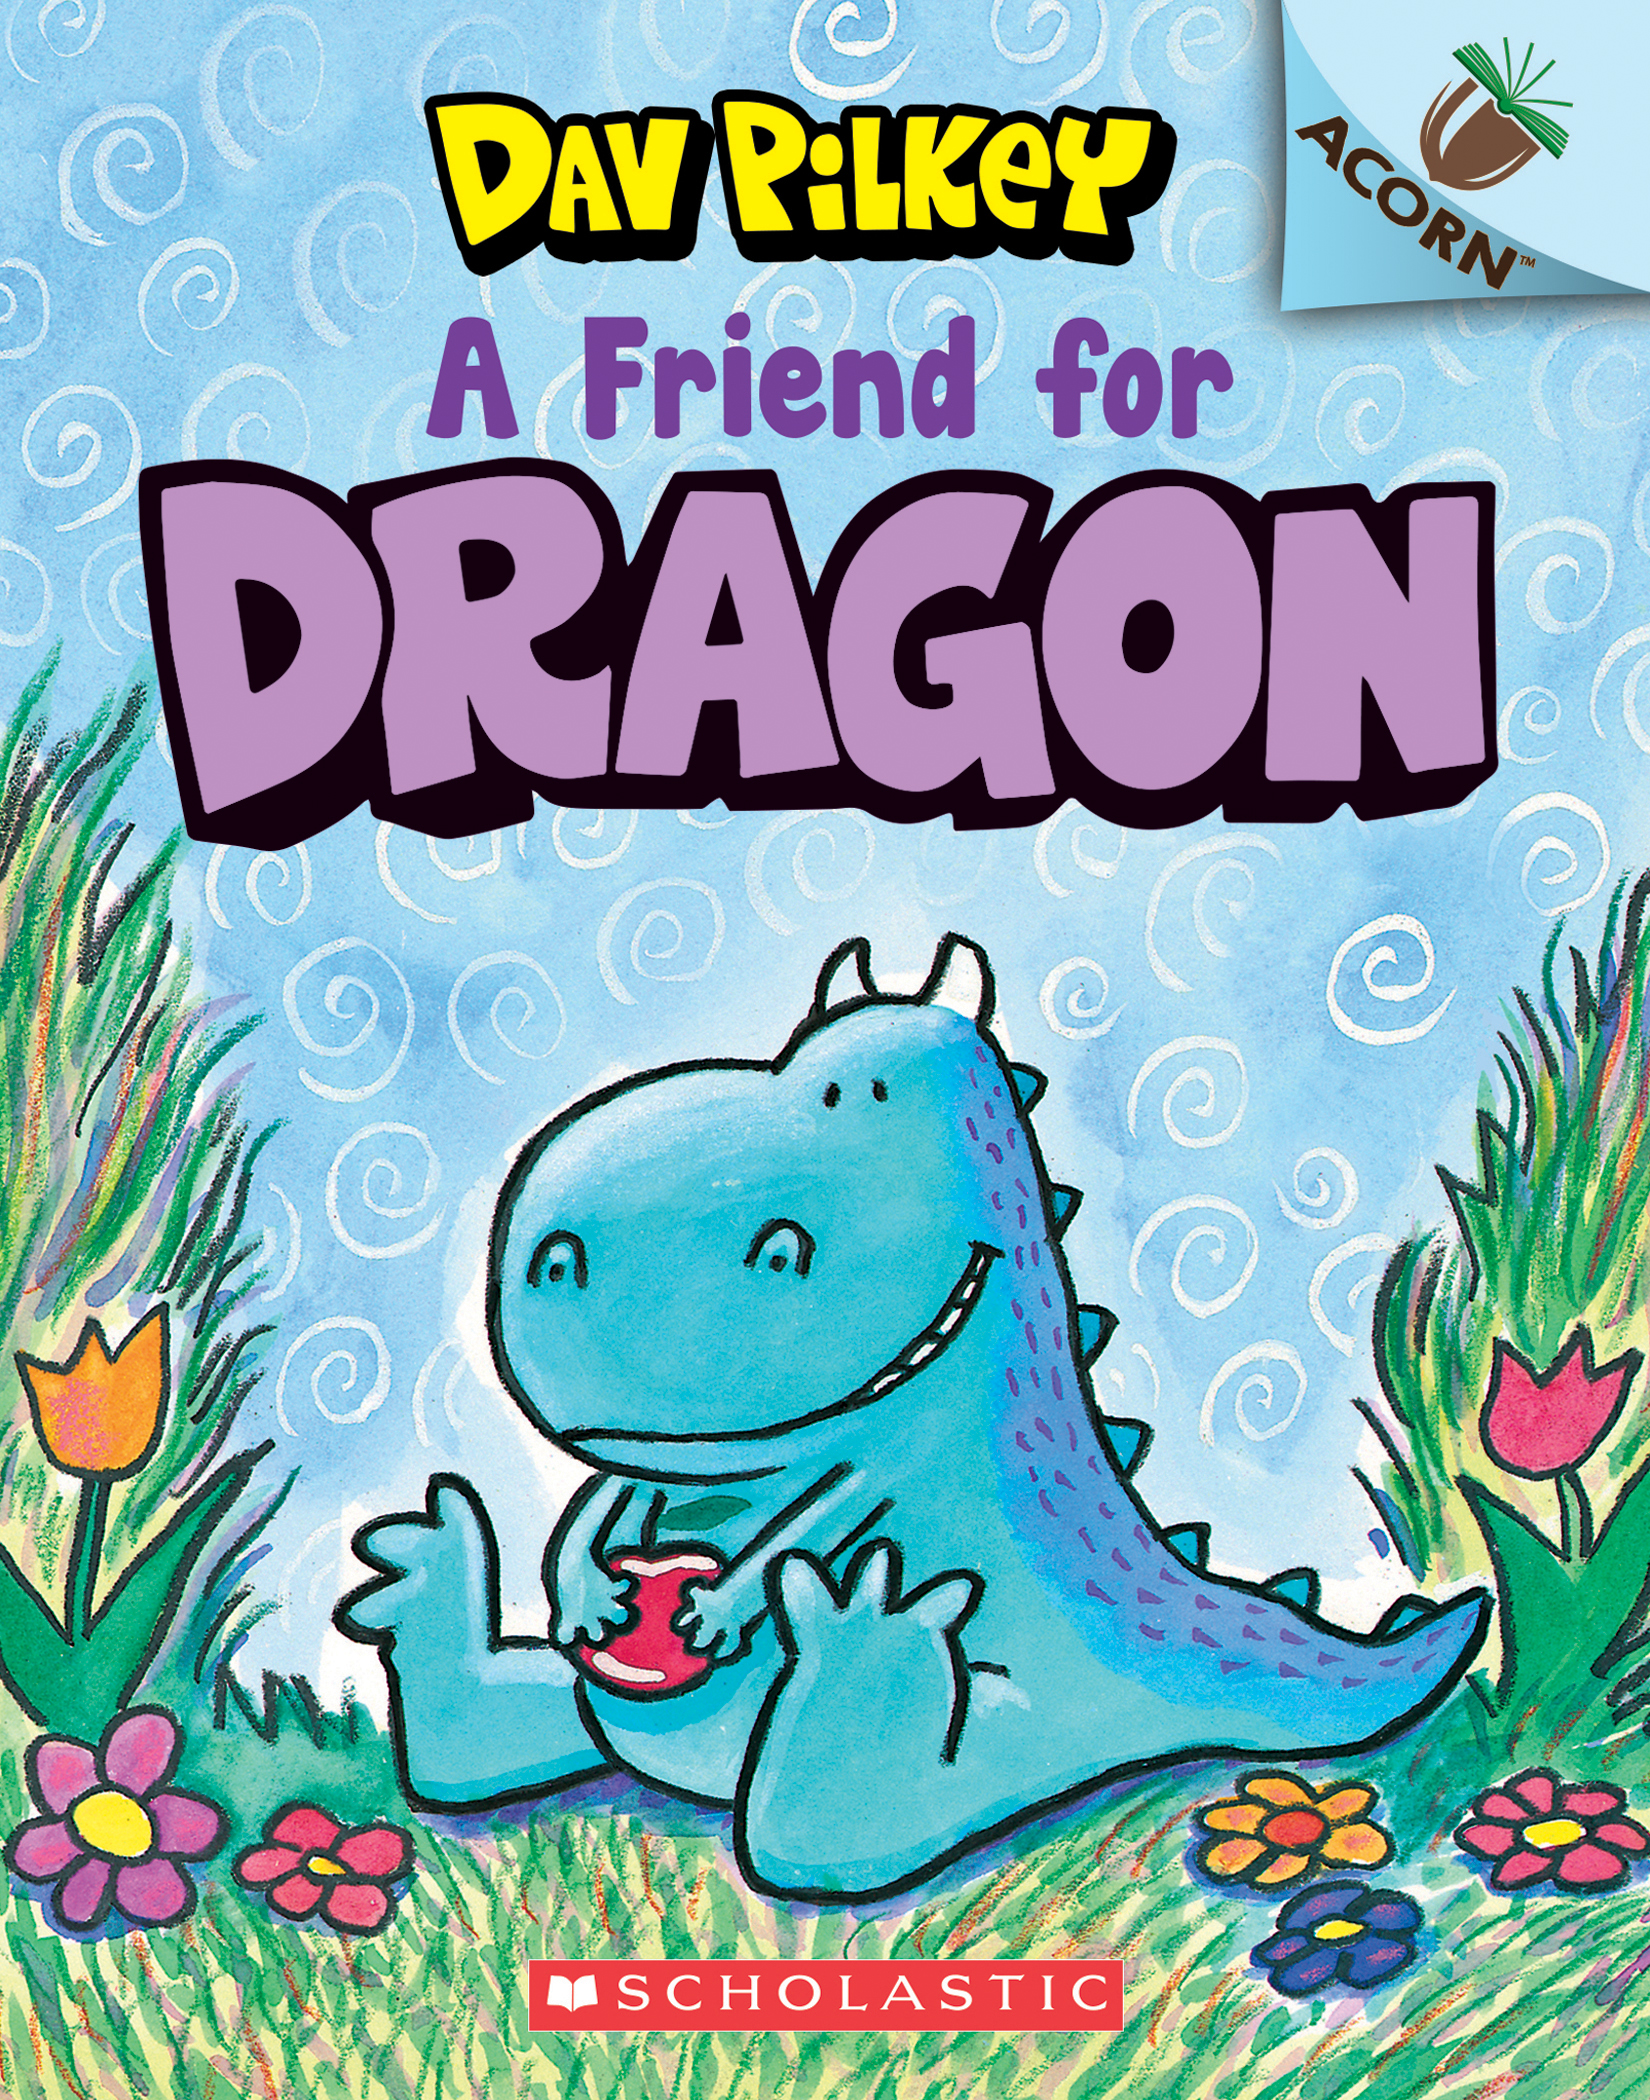 A Friend For Dragon